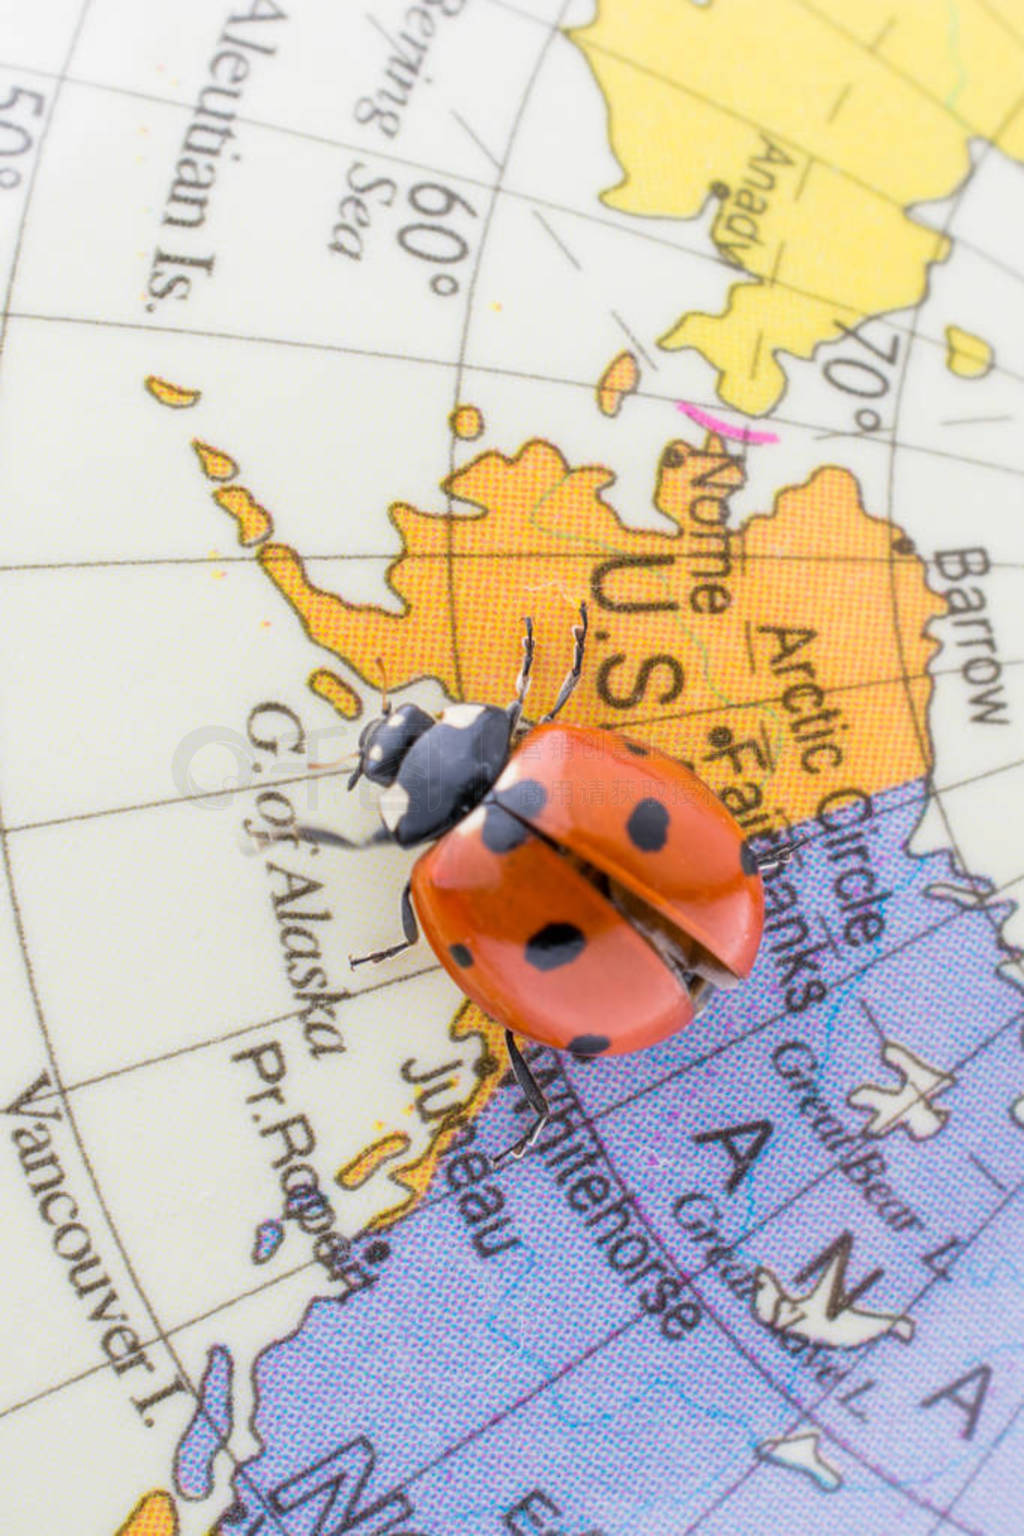 Ladybug on a little colorful model globe